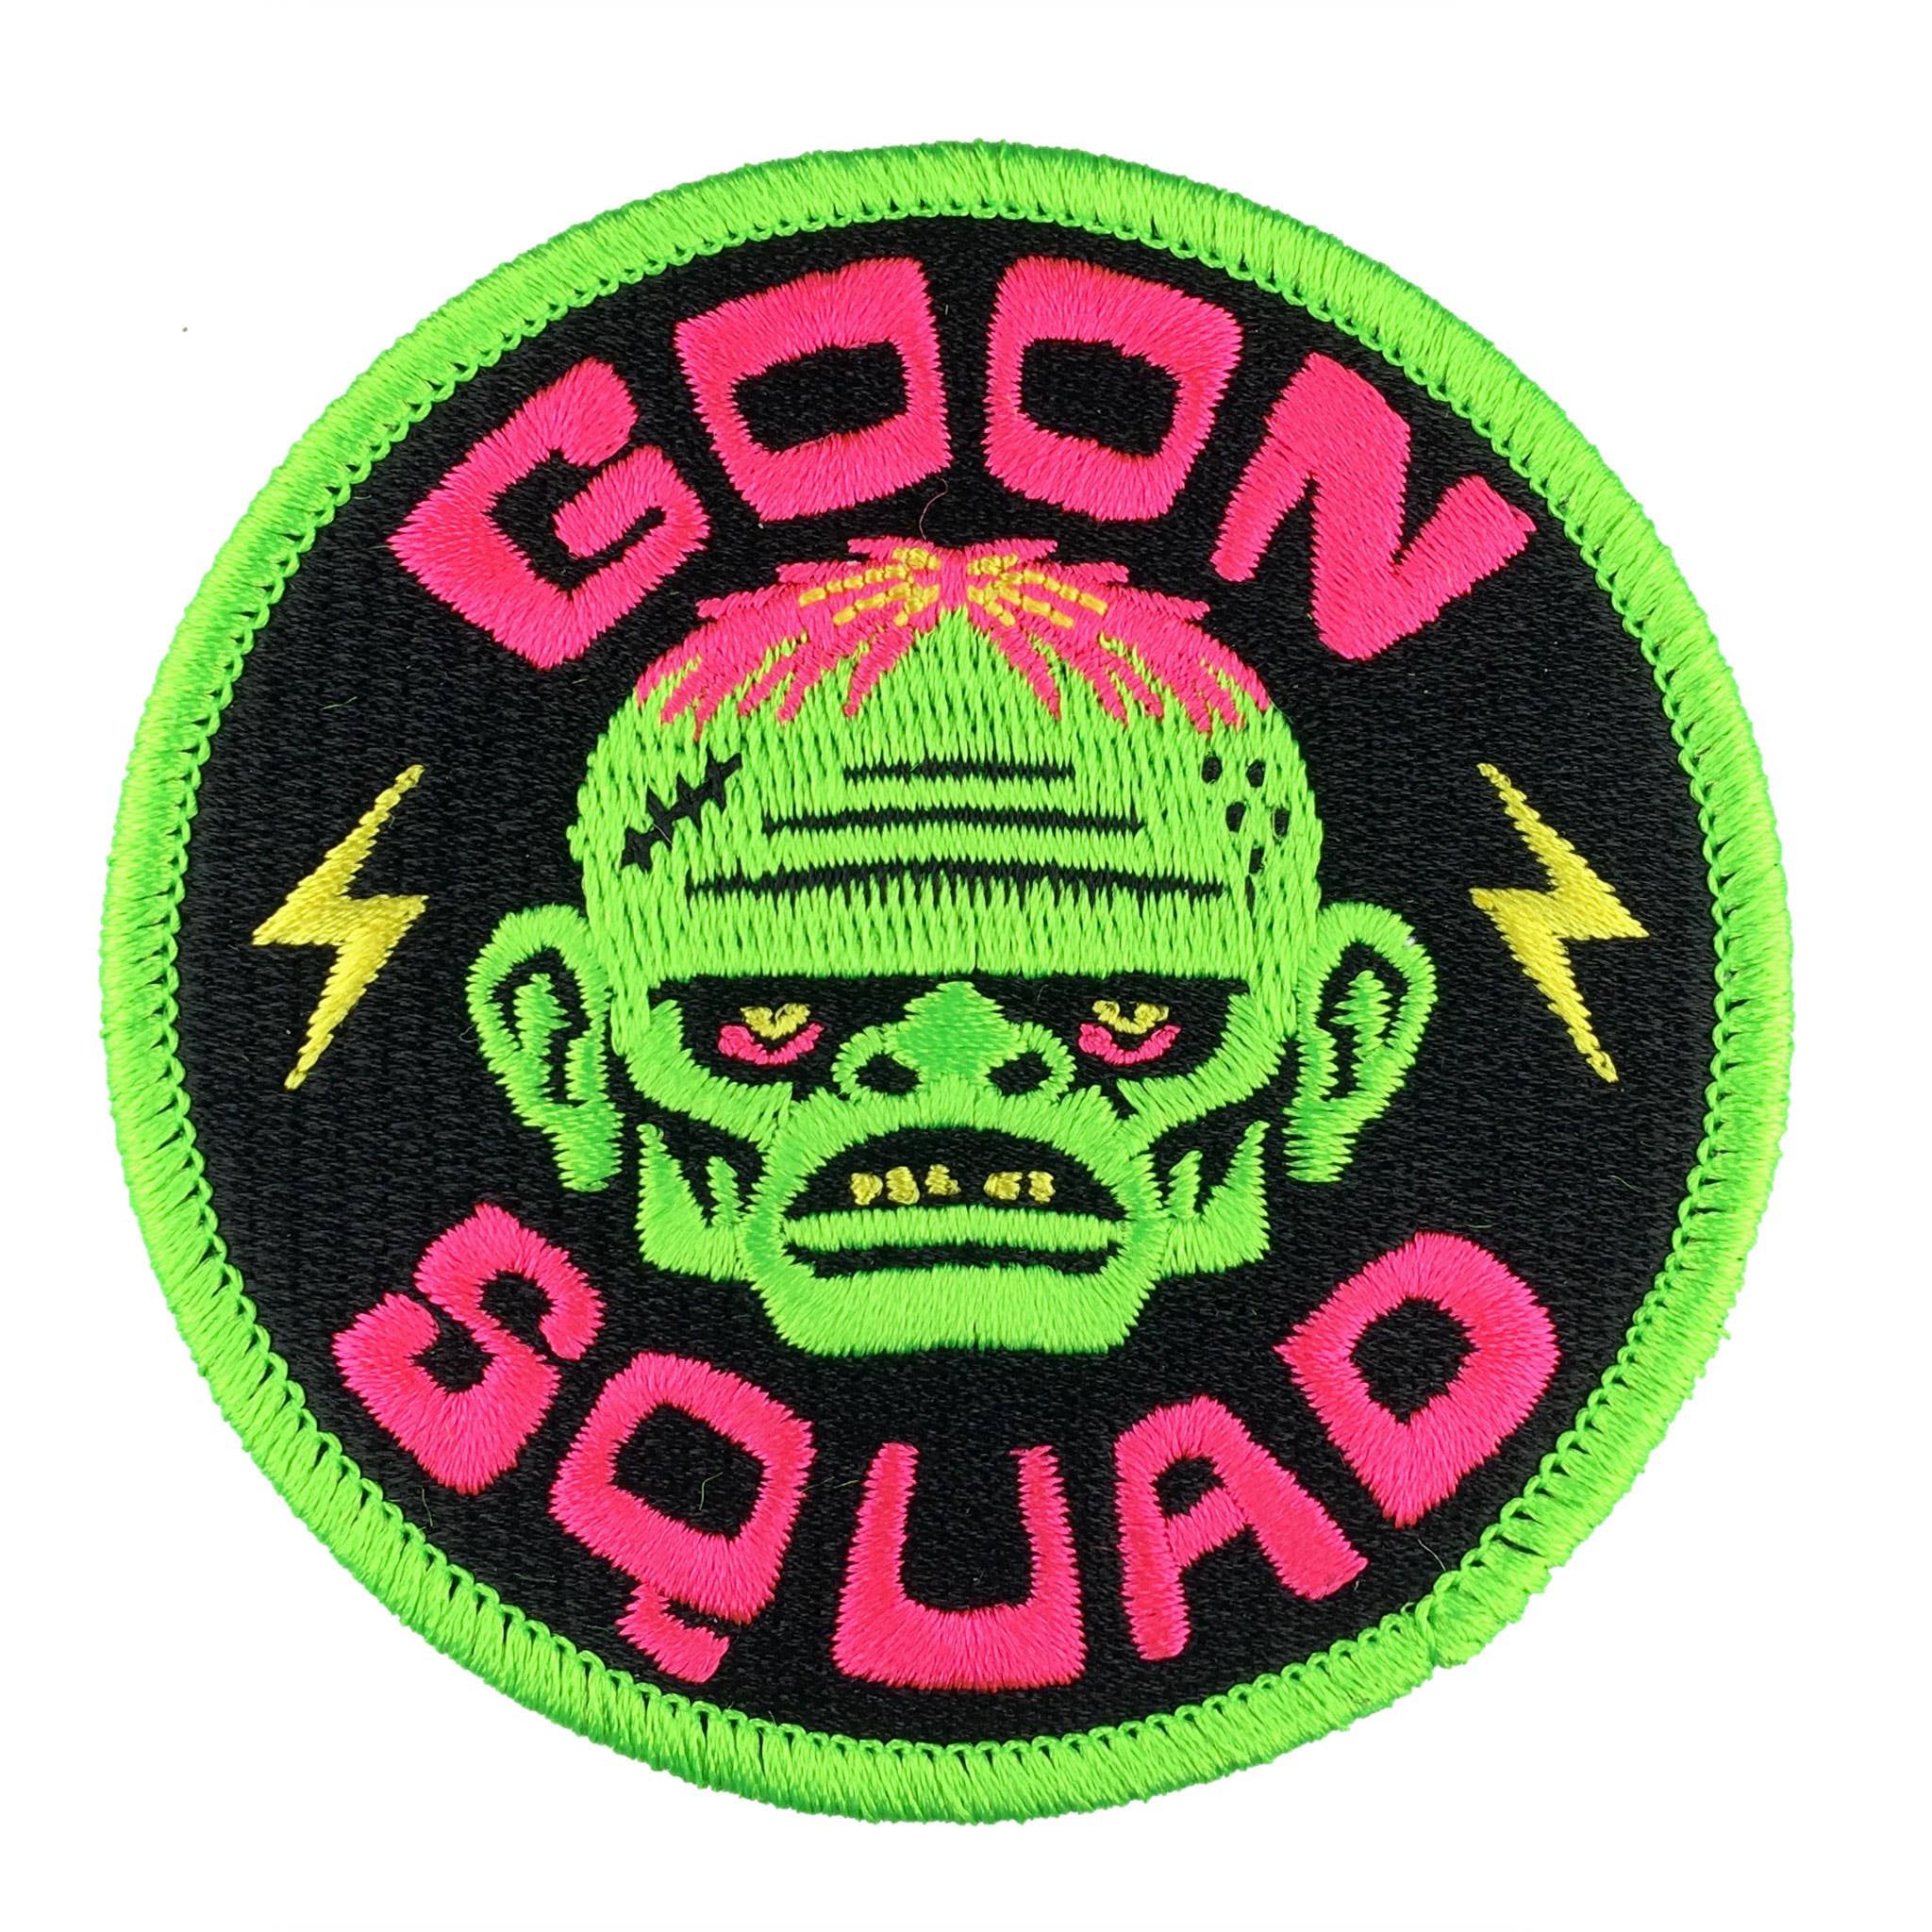 Goon Squad Patch